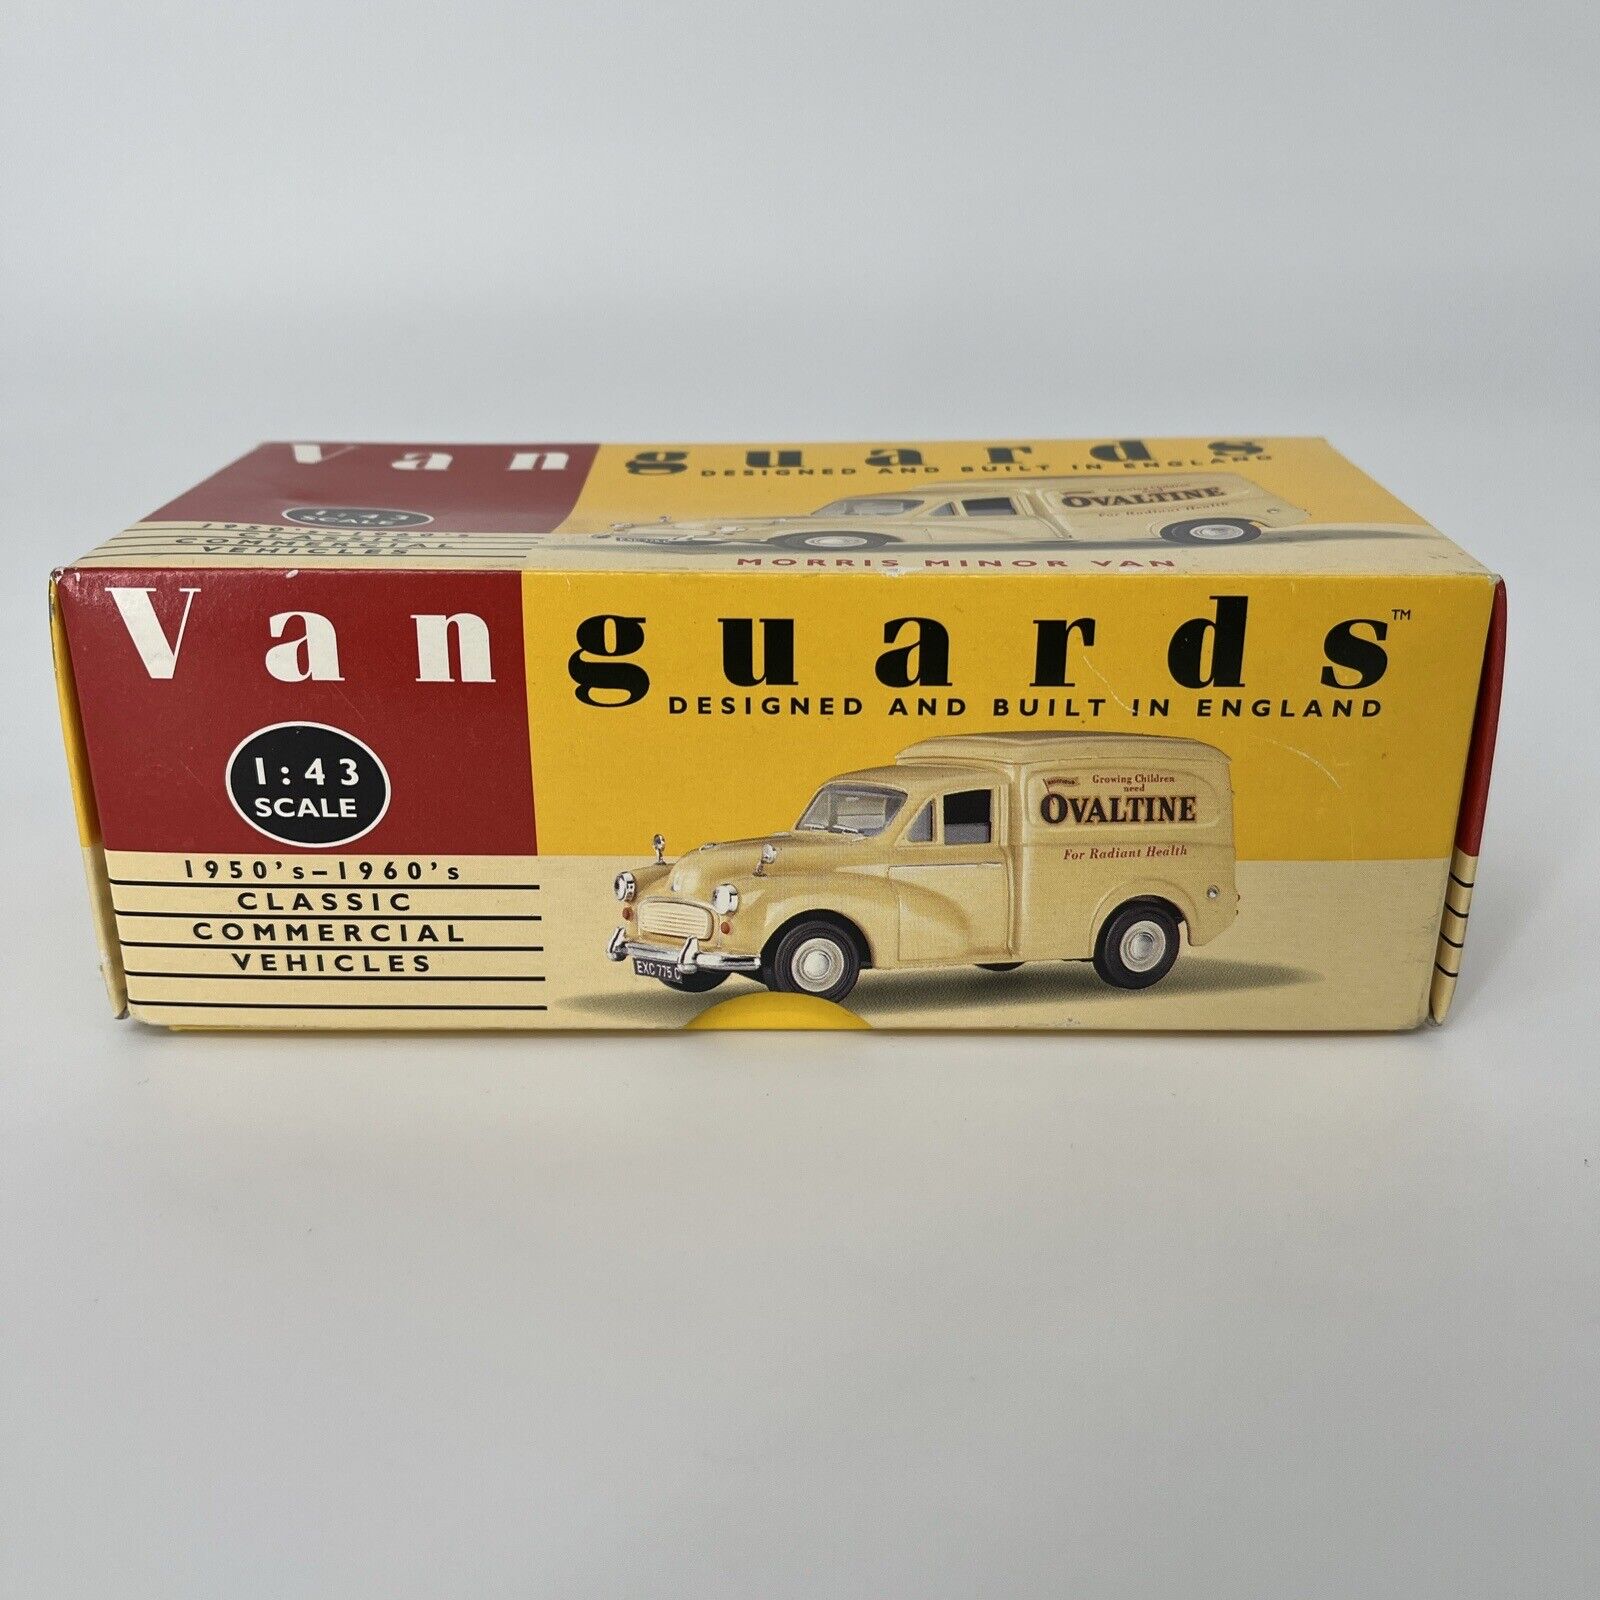 Vanguards Ovaltine Truck 1:43 Scale 1950’s-1960’s